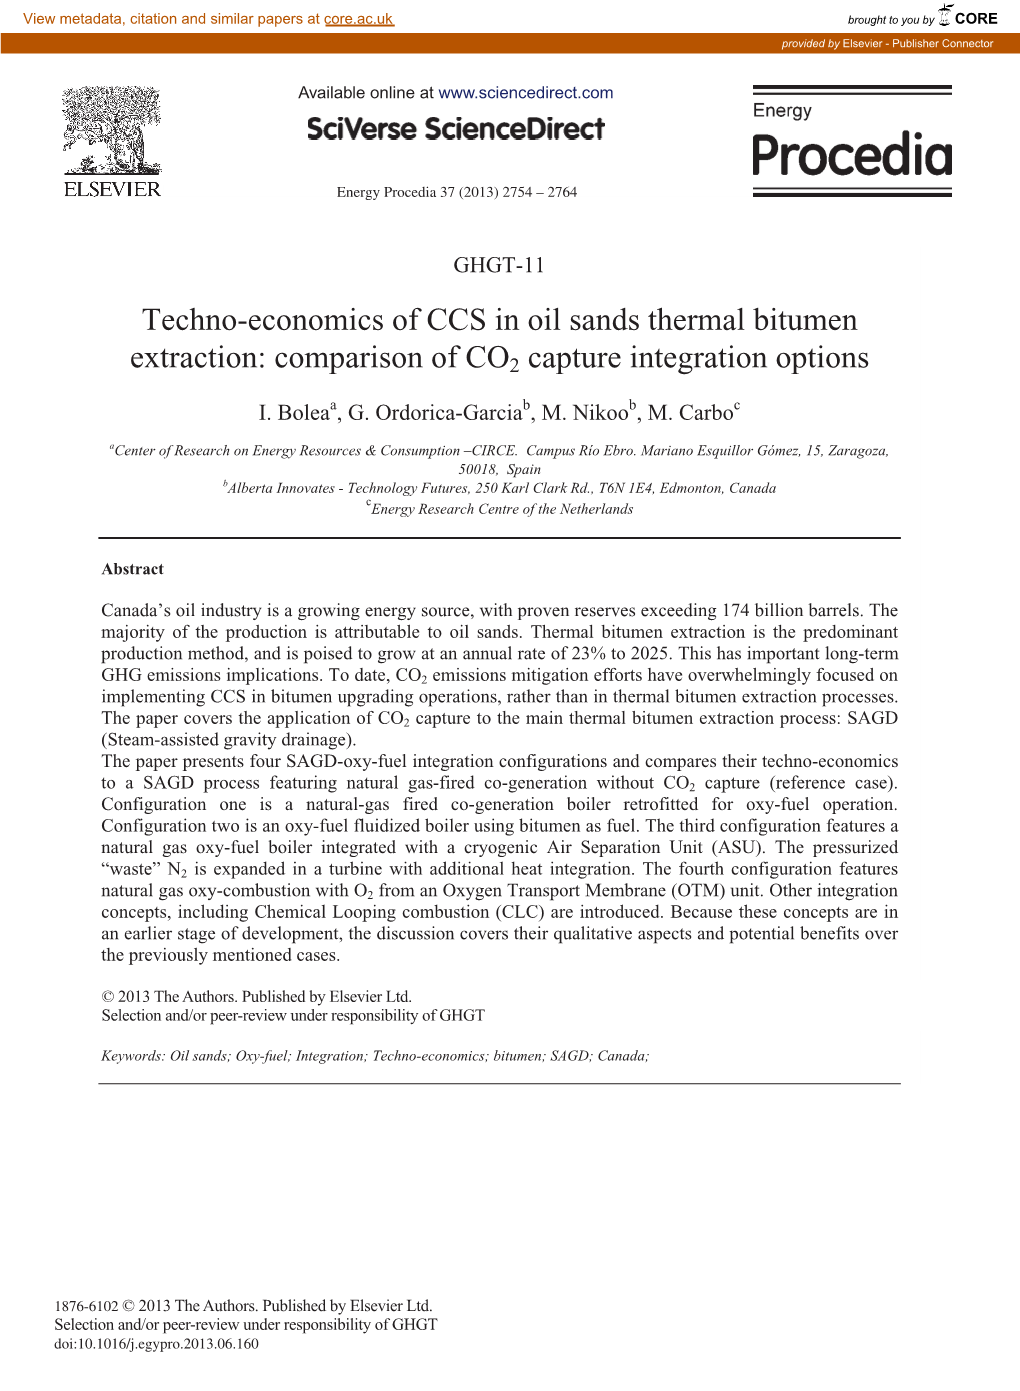 Techno-Economics of CCS in Oil Sands Thermal Bitumen Extraction: Comparison of CO2 Capture Integration Options